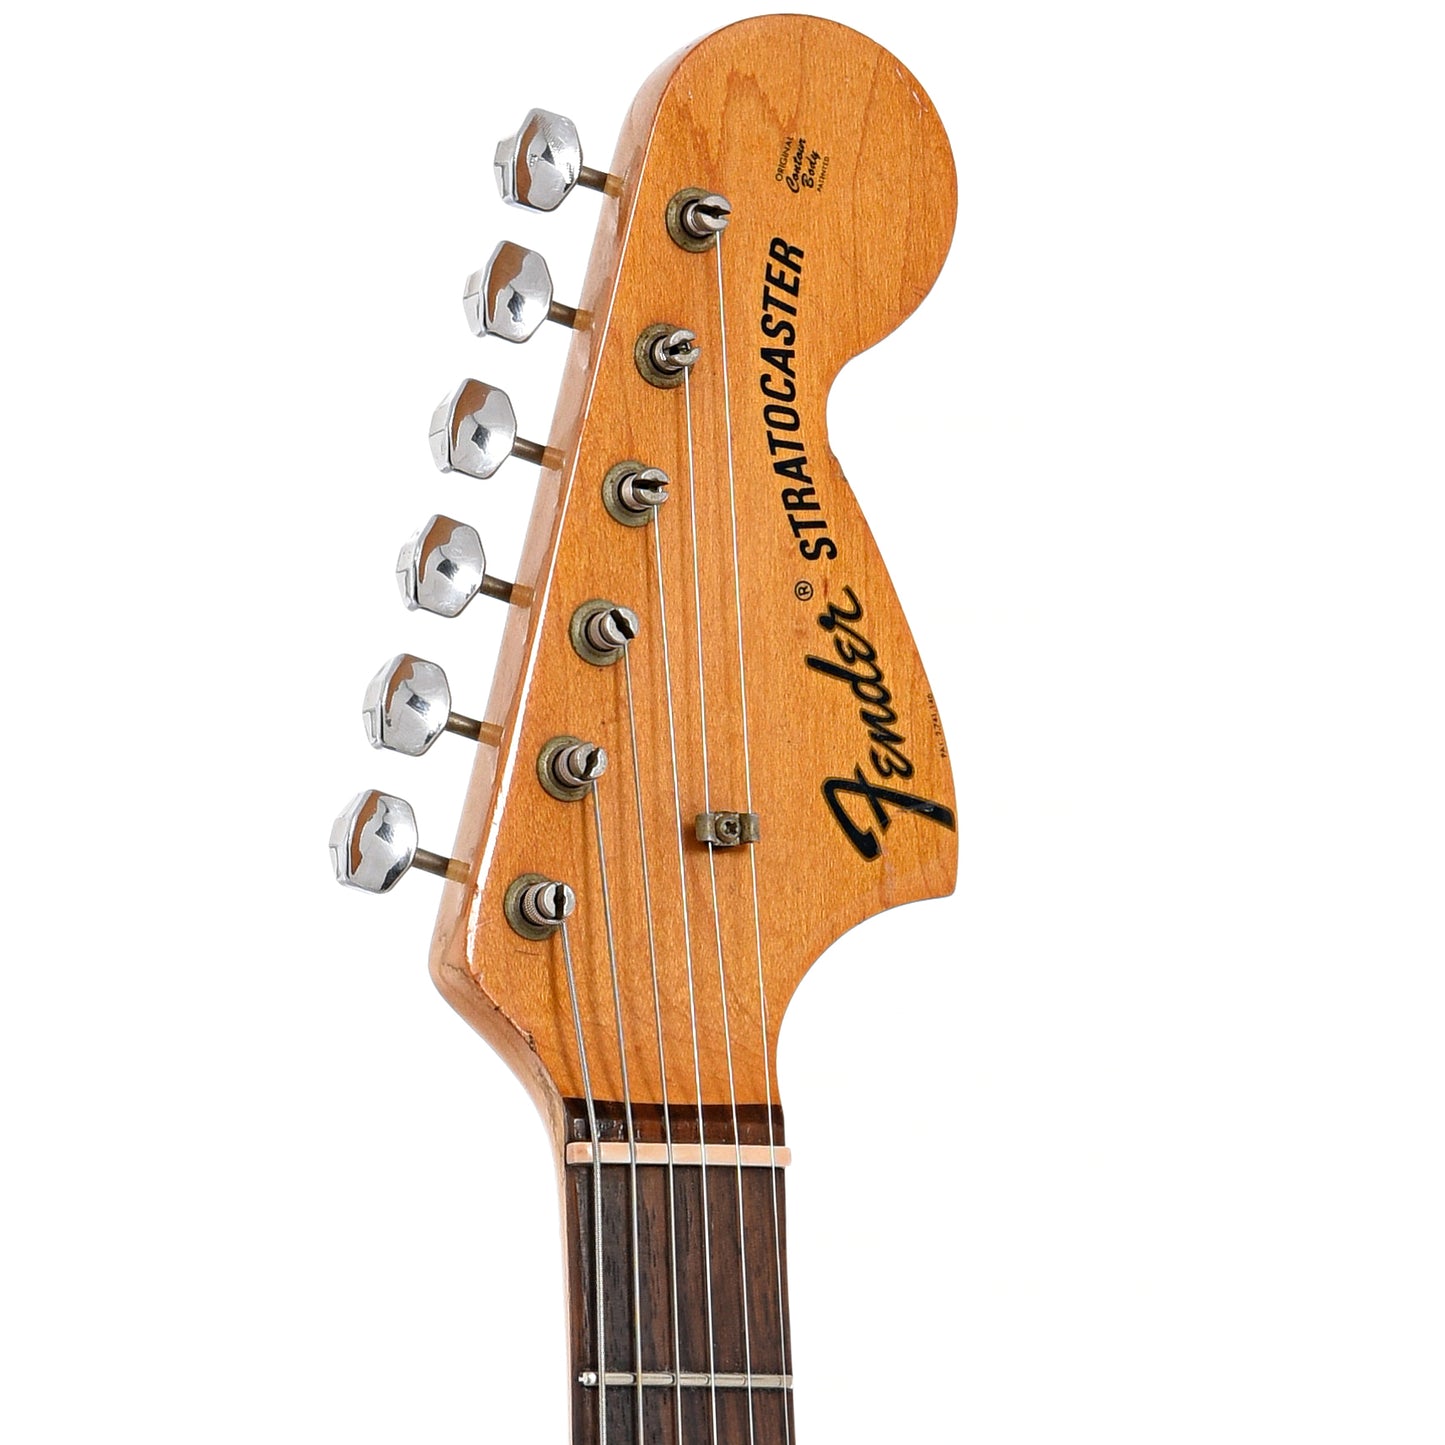 Front headstock of Fender Stratocaster